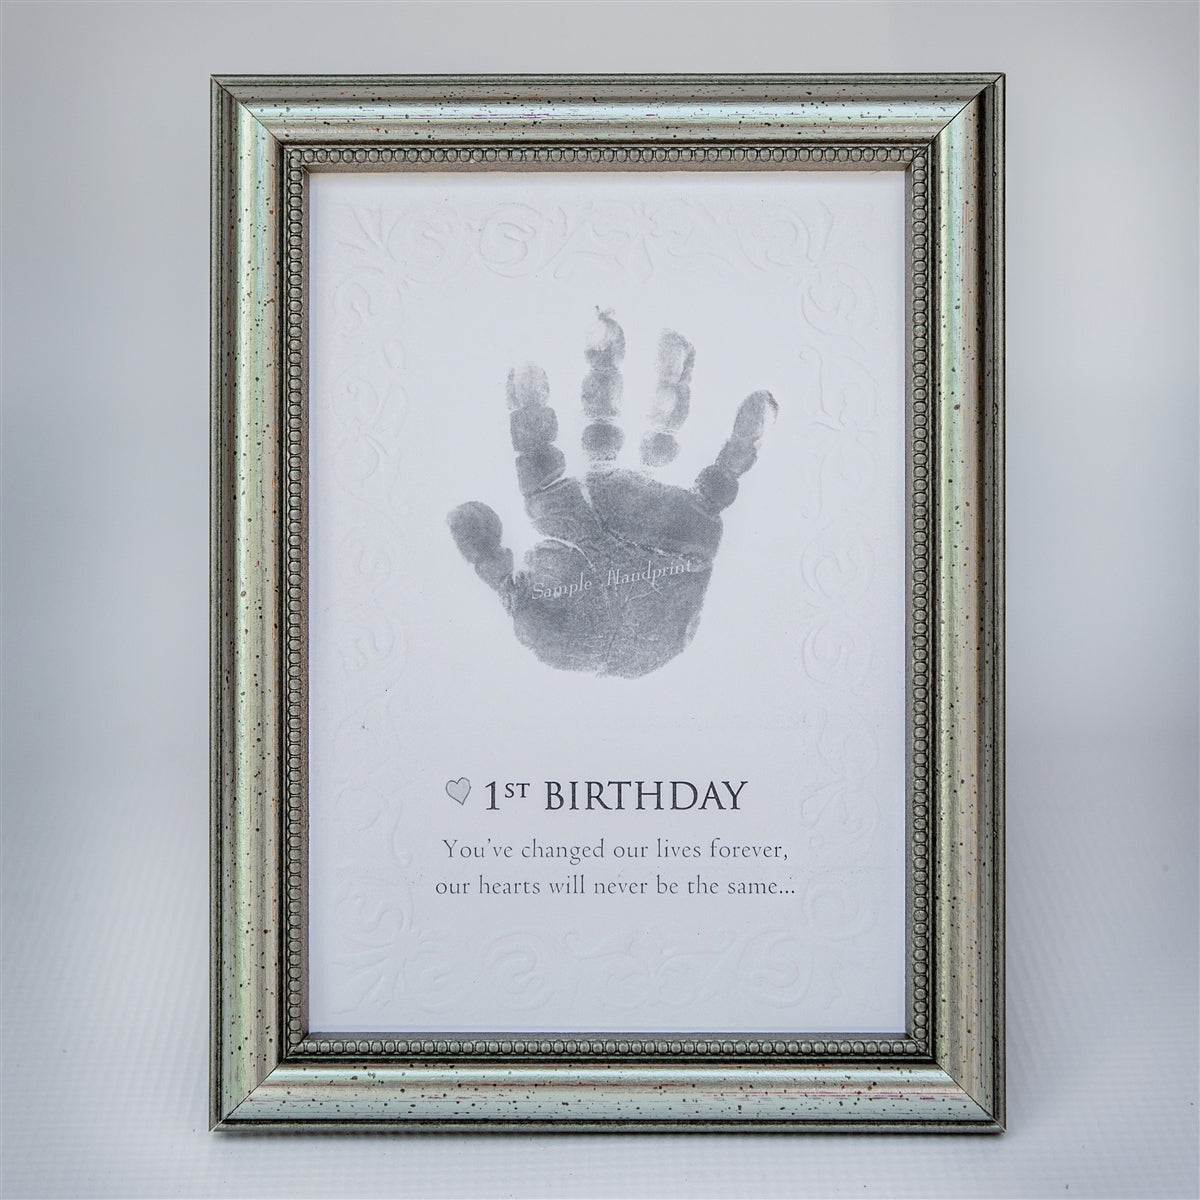 1st Birthday handprint keepsake in elegant frame in silver with embossed beaded design.